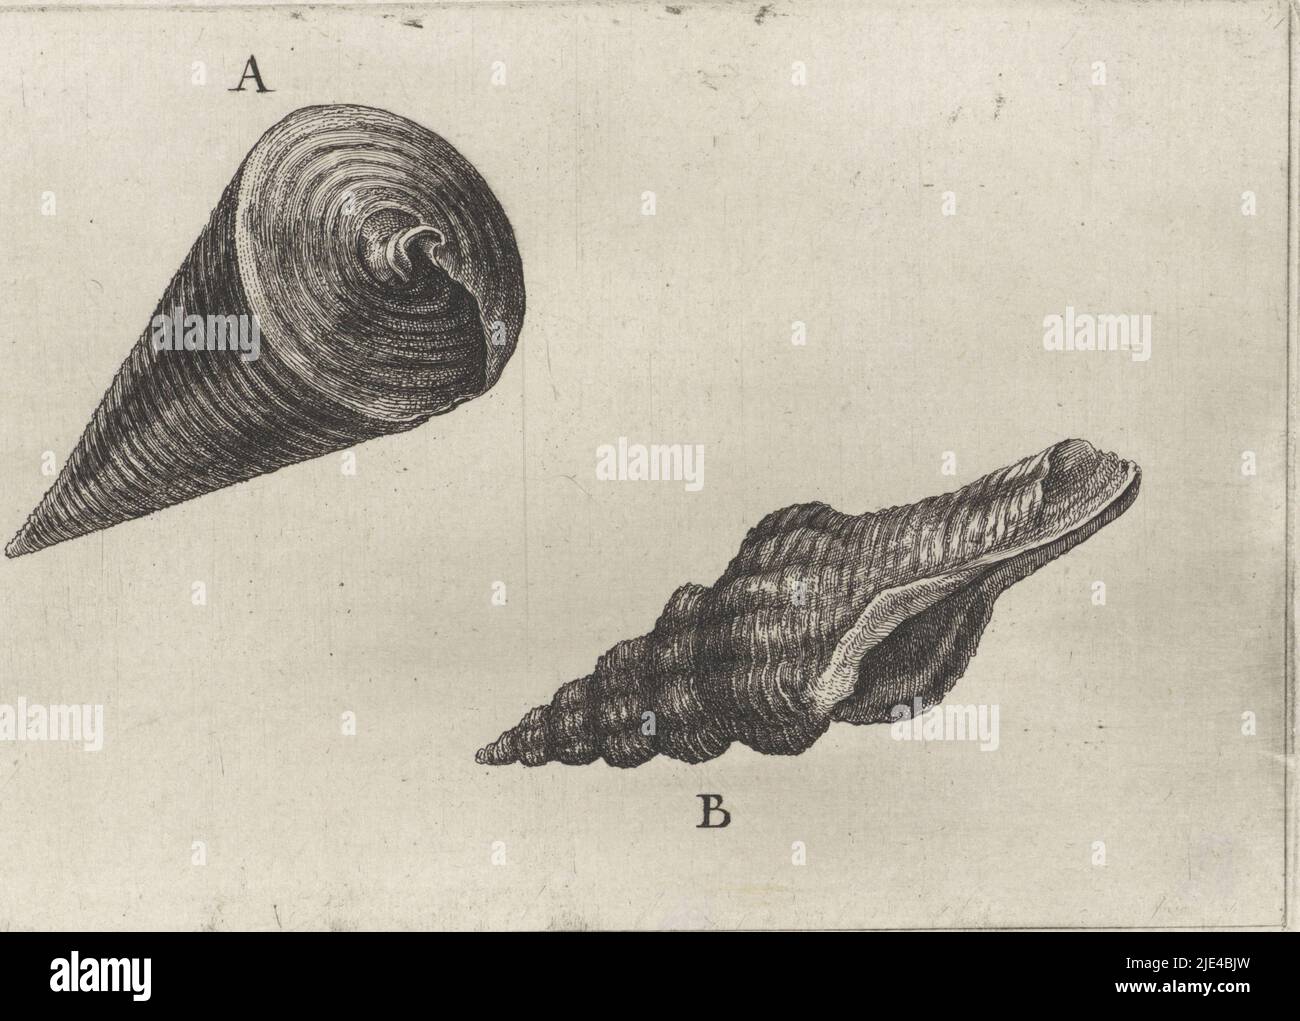 Shells, telescopium telescopium (A) and fusinus laticostatus (B), Wenceslaus Hollar, 1644 - 1652, print maker: Wenceslaus Hollar, Antwerp, 1644 - 1652, paper, etching, h 100 mm × w 146 mm Stock Photo